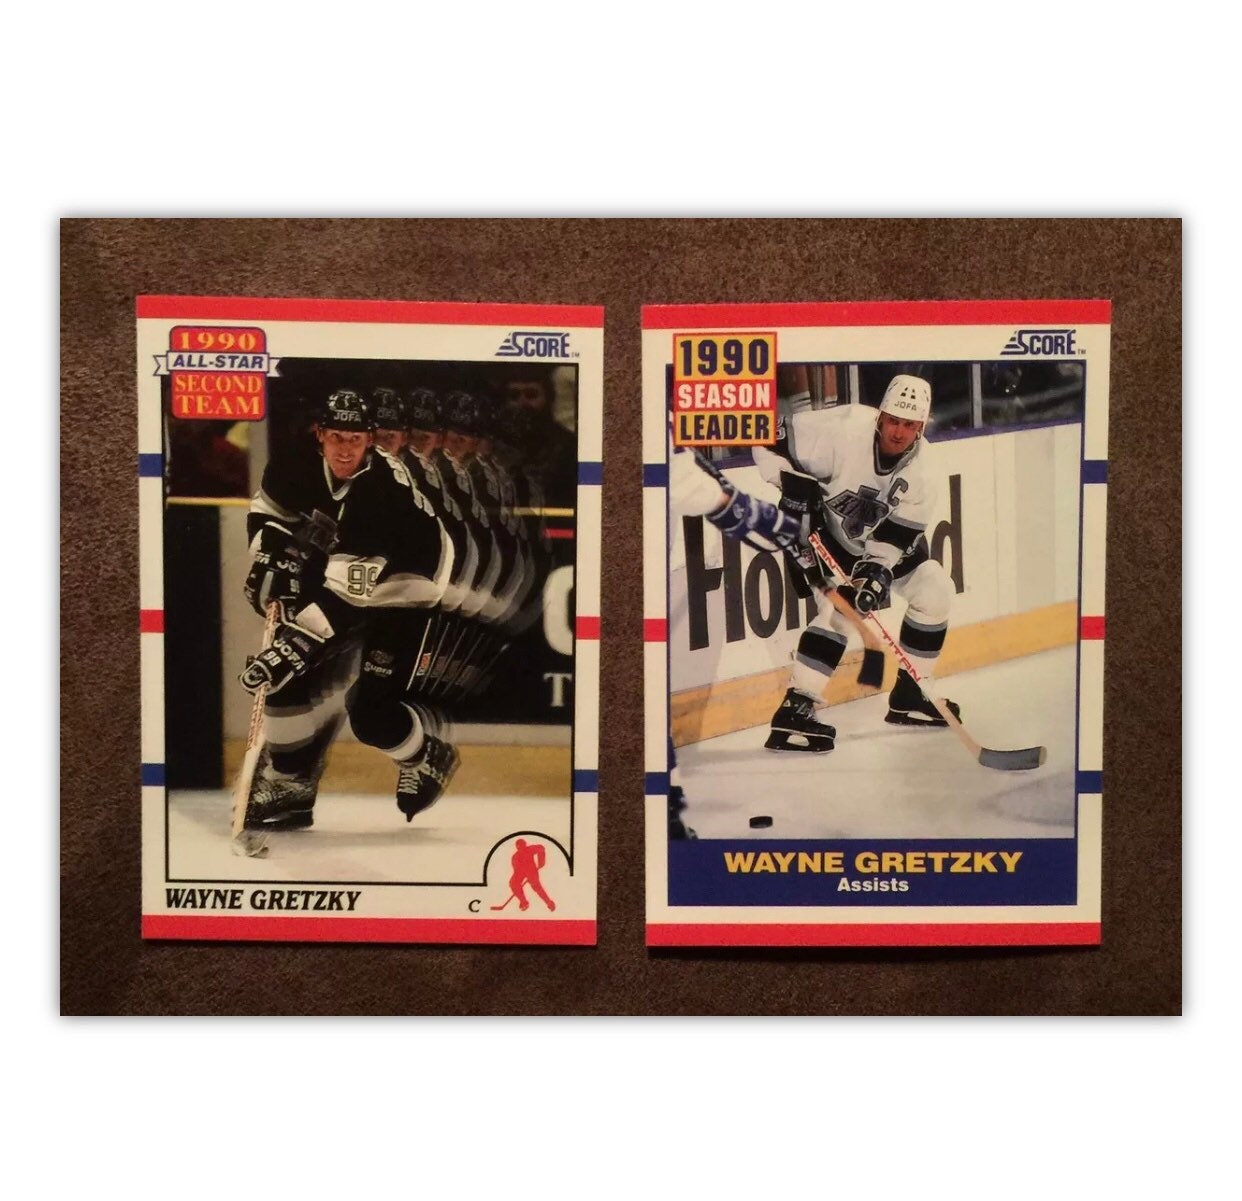 Original Vintage Hockey Cards Score 1991 NHL Pack Of Cards Unopened Pack of  Cards 90s Plastic Pack 1980s 1990s Nostalgic